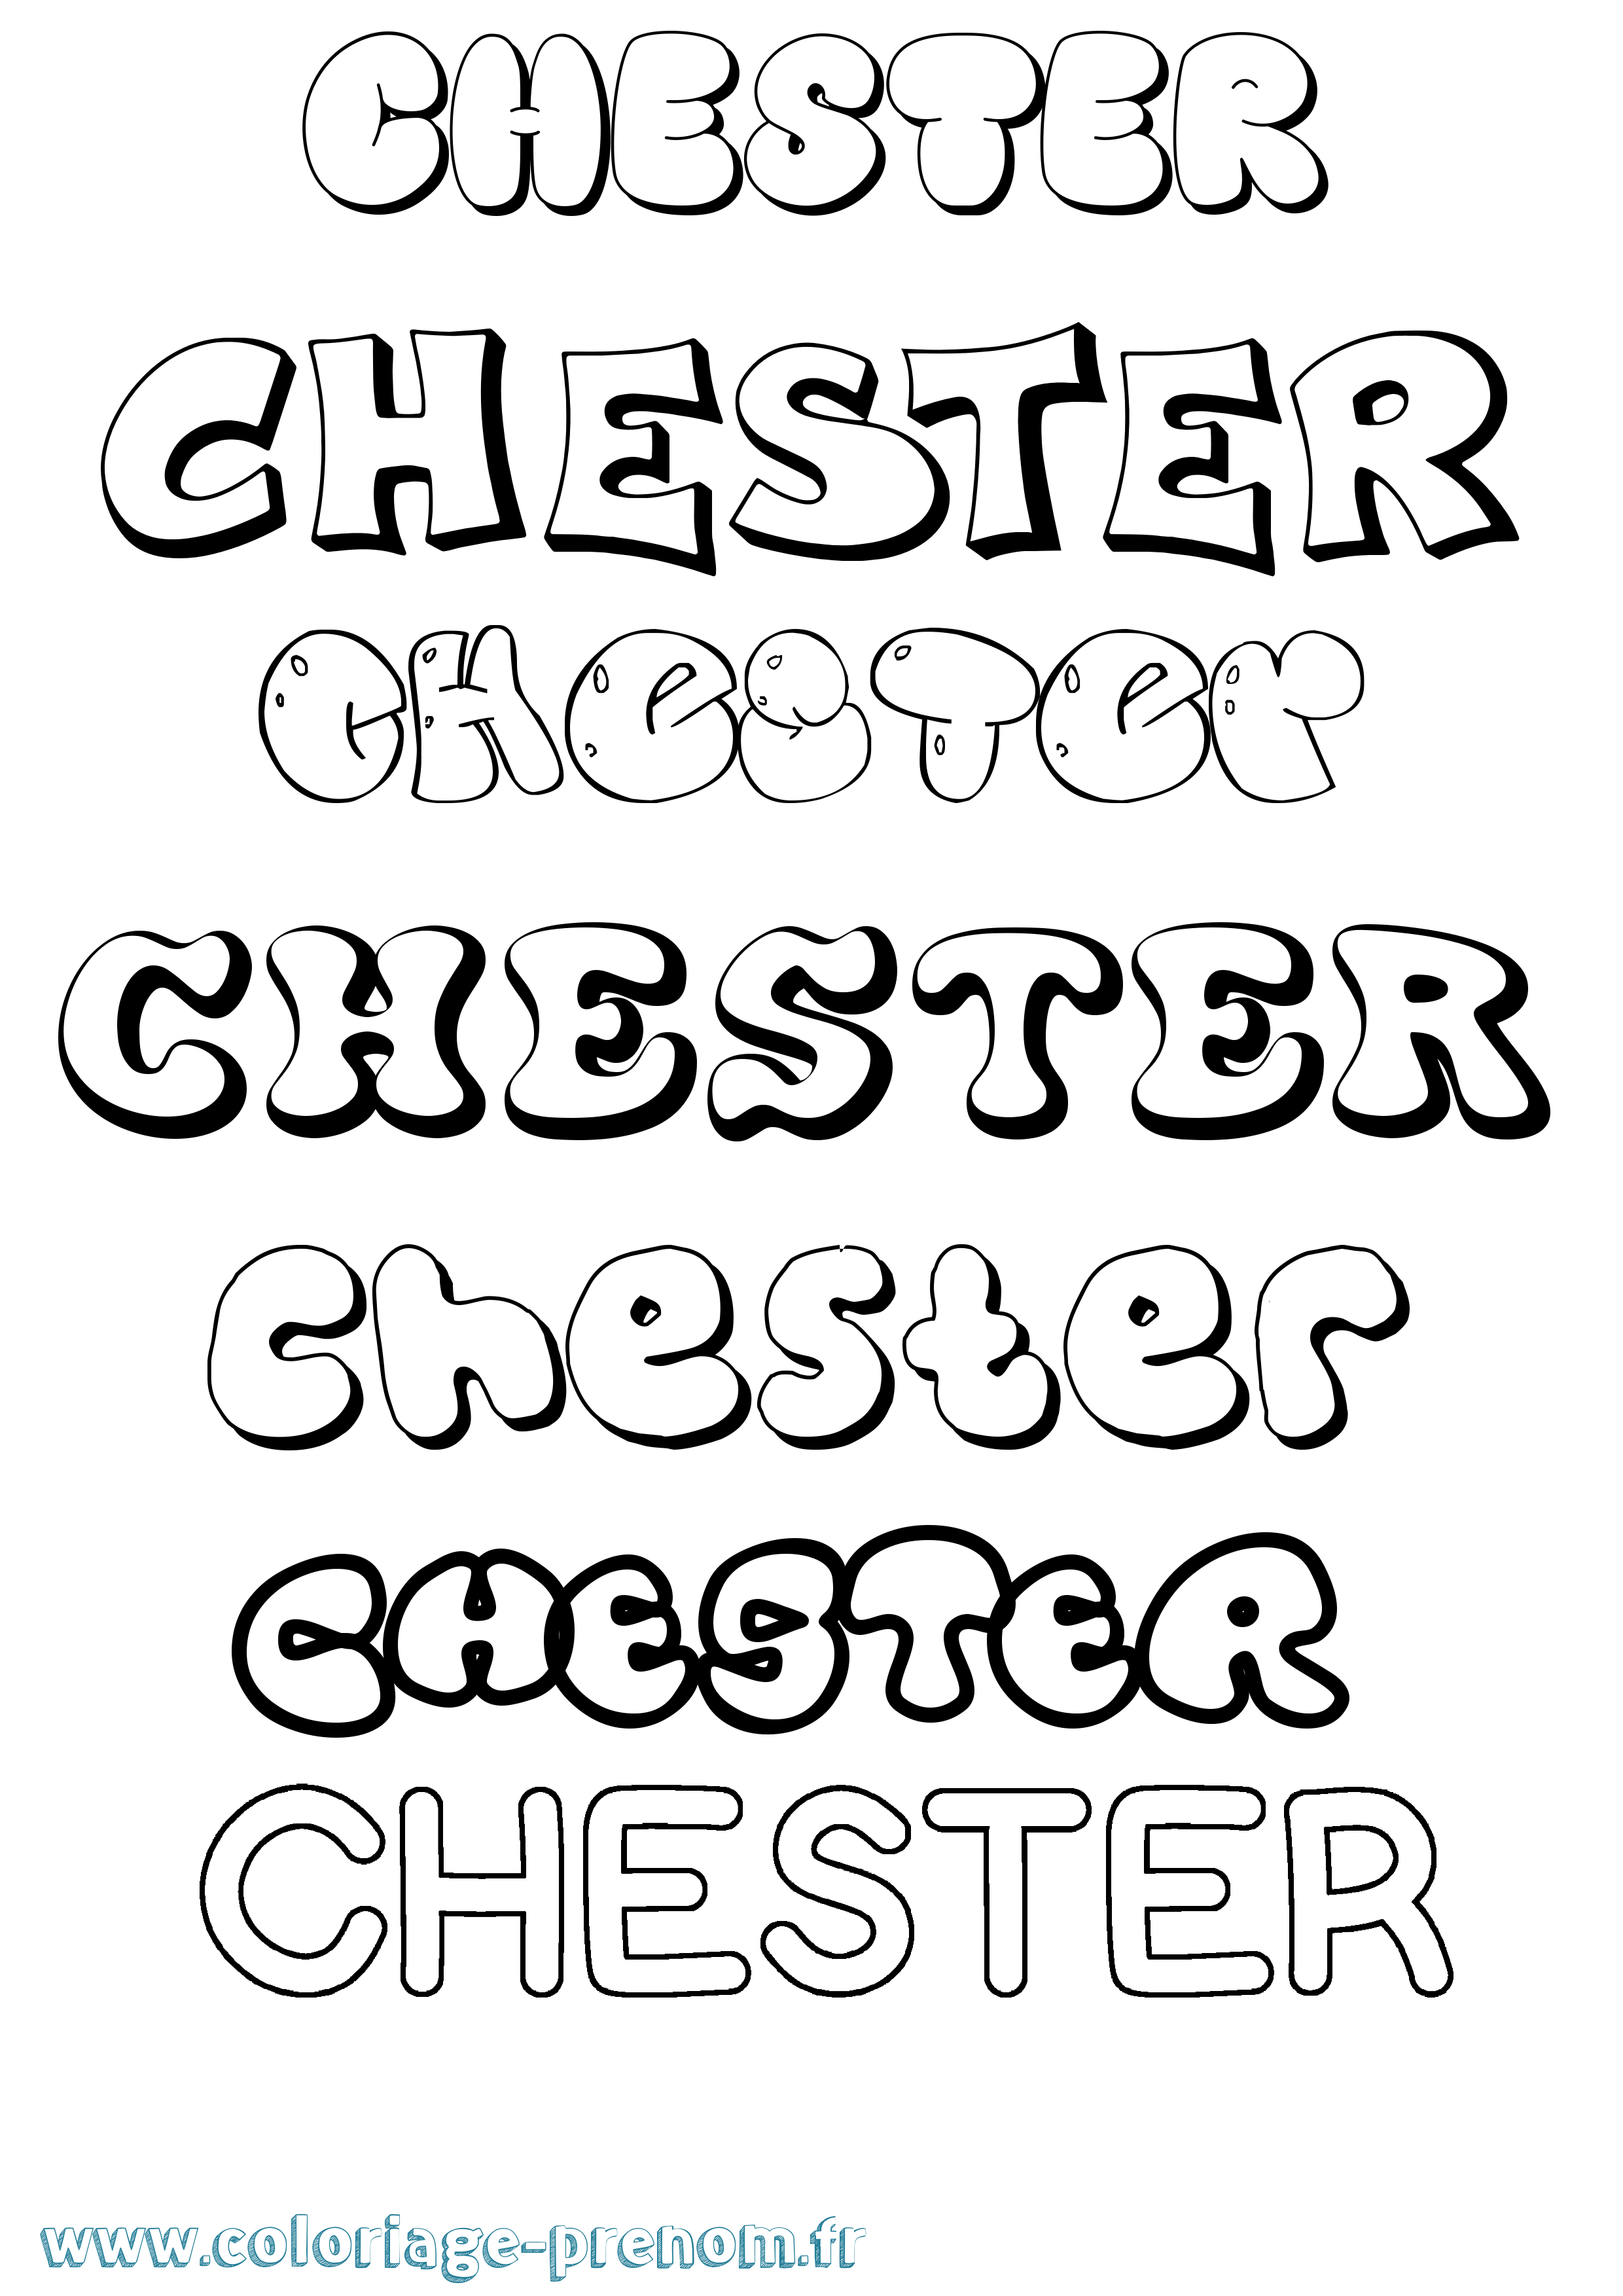 Coloriage prénom Chester Bubble